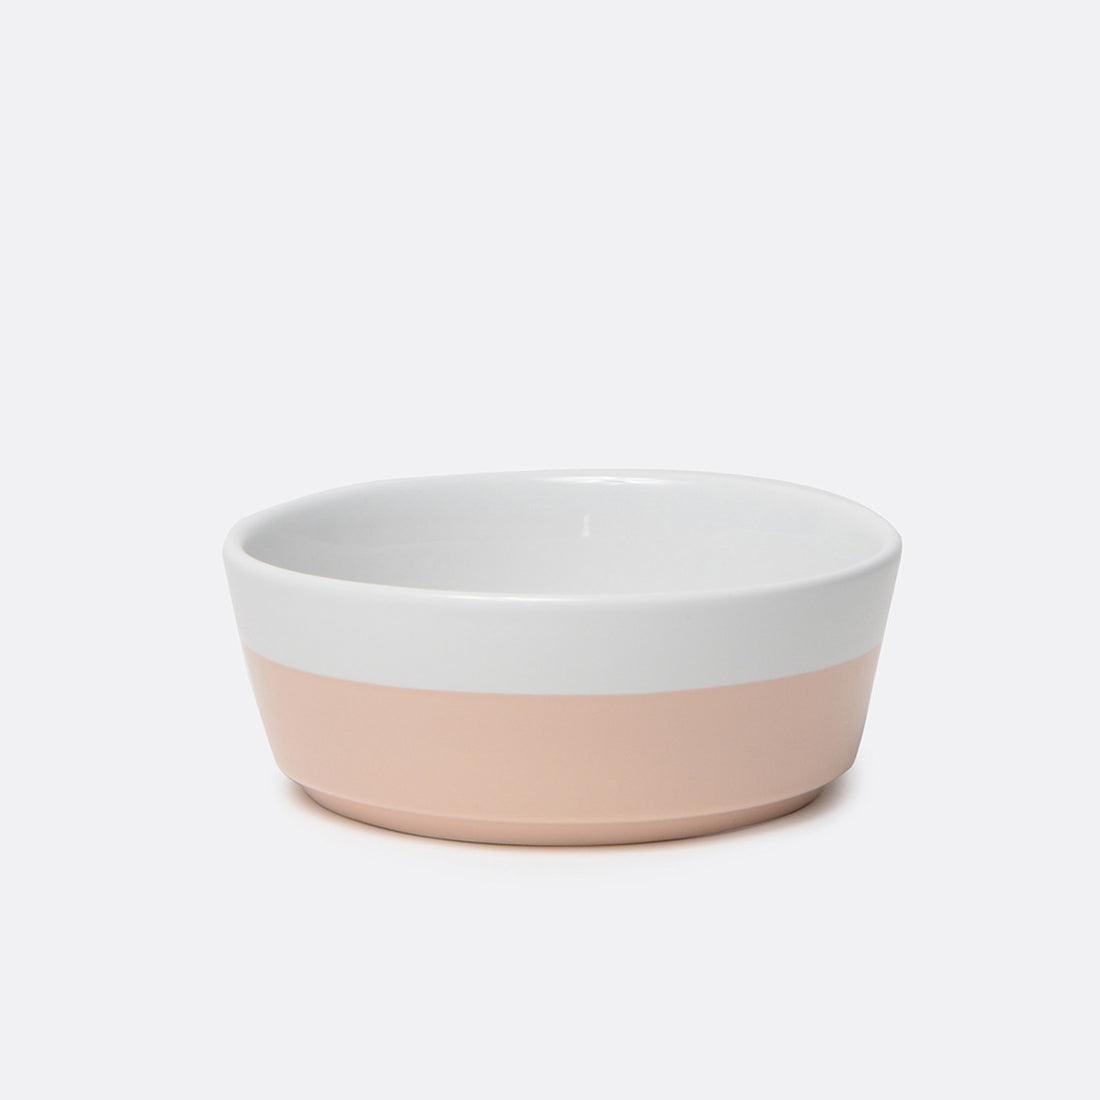 Small green dog bowl Woof – Dashing Ceramics